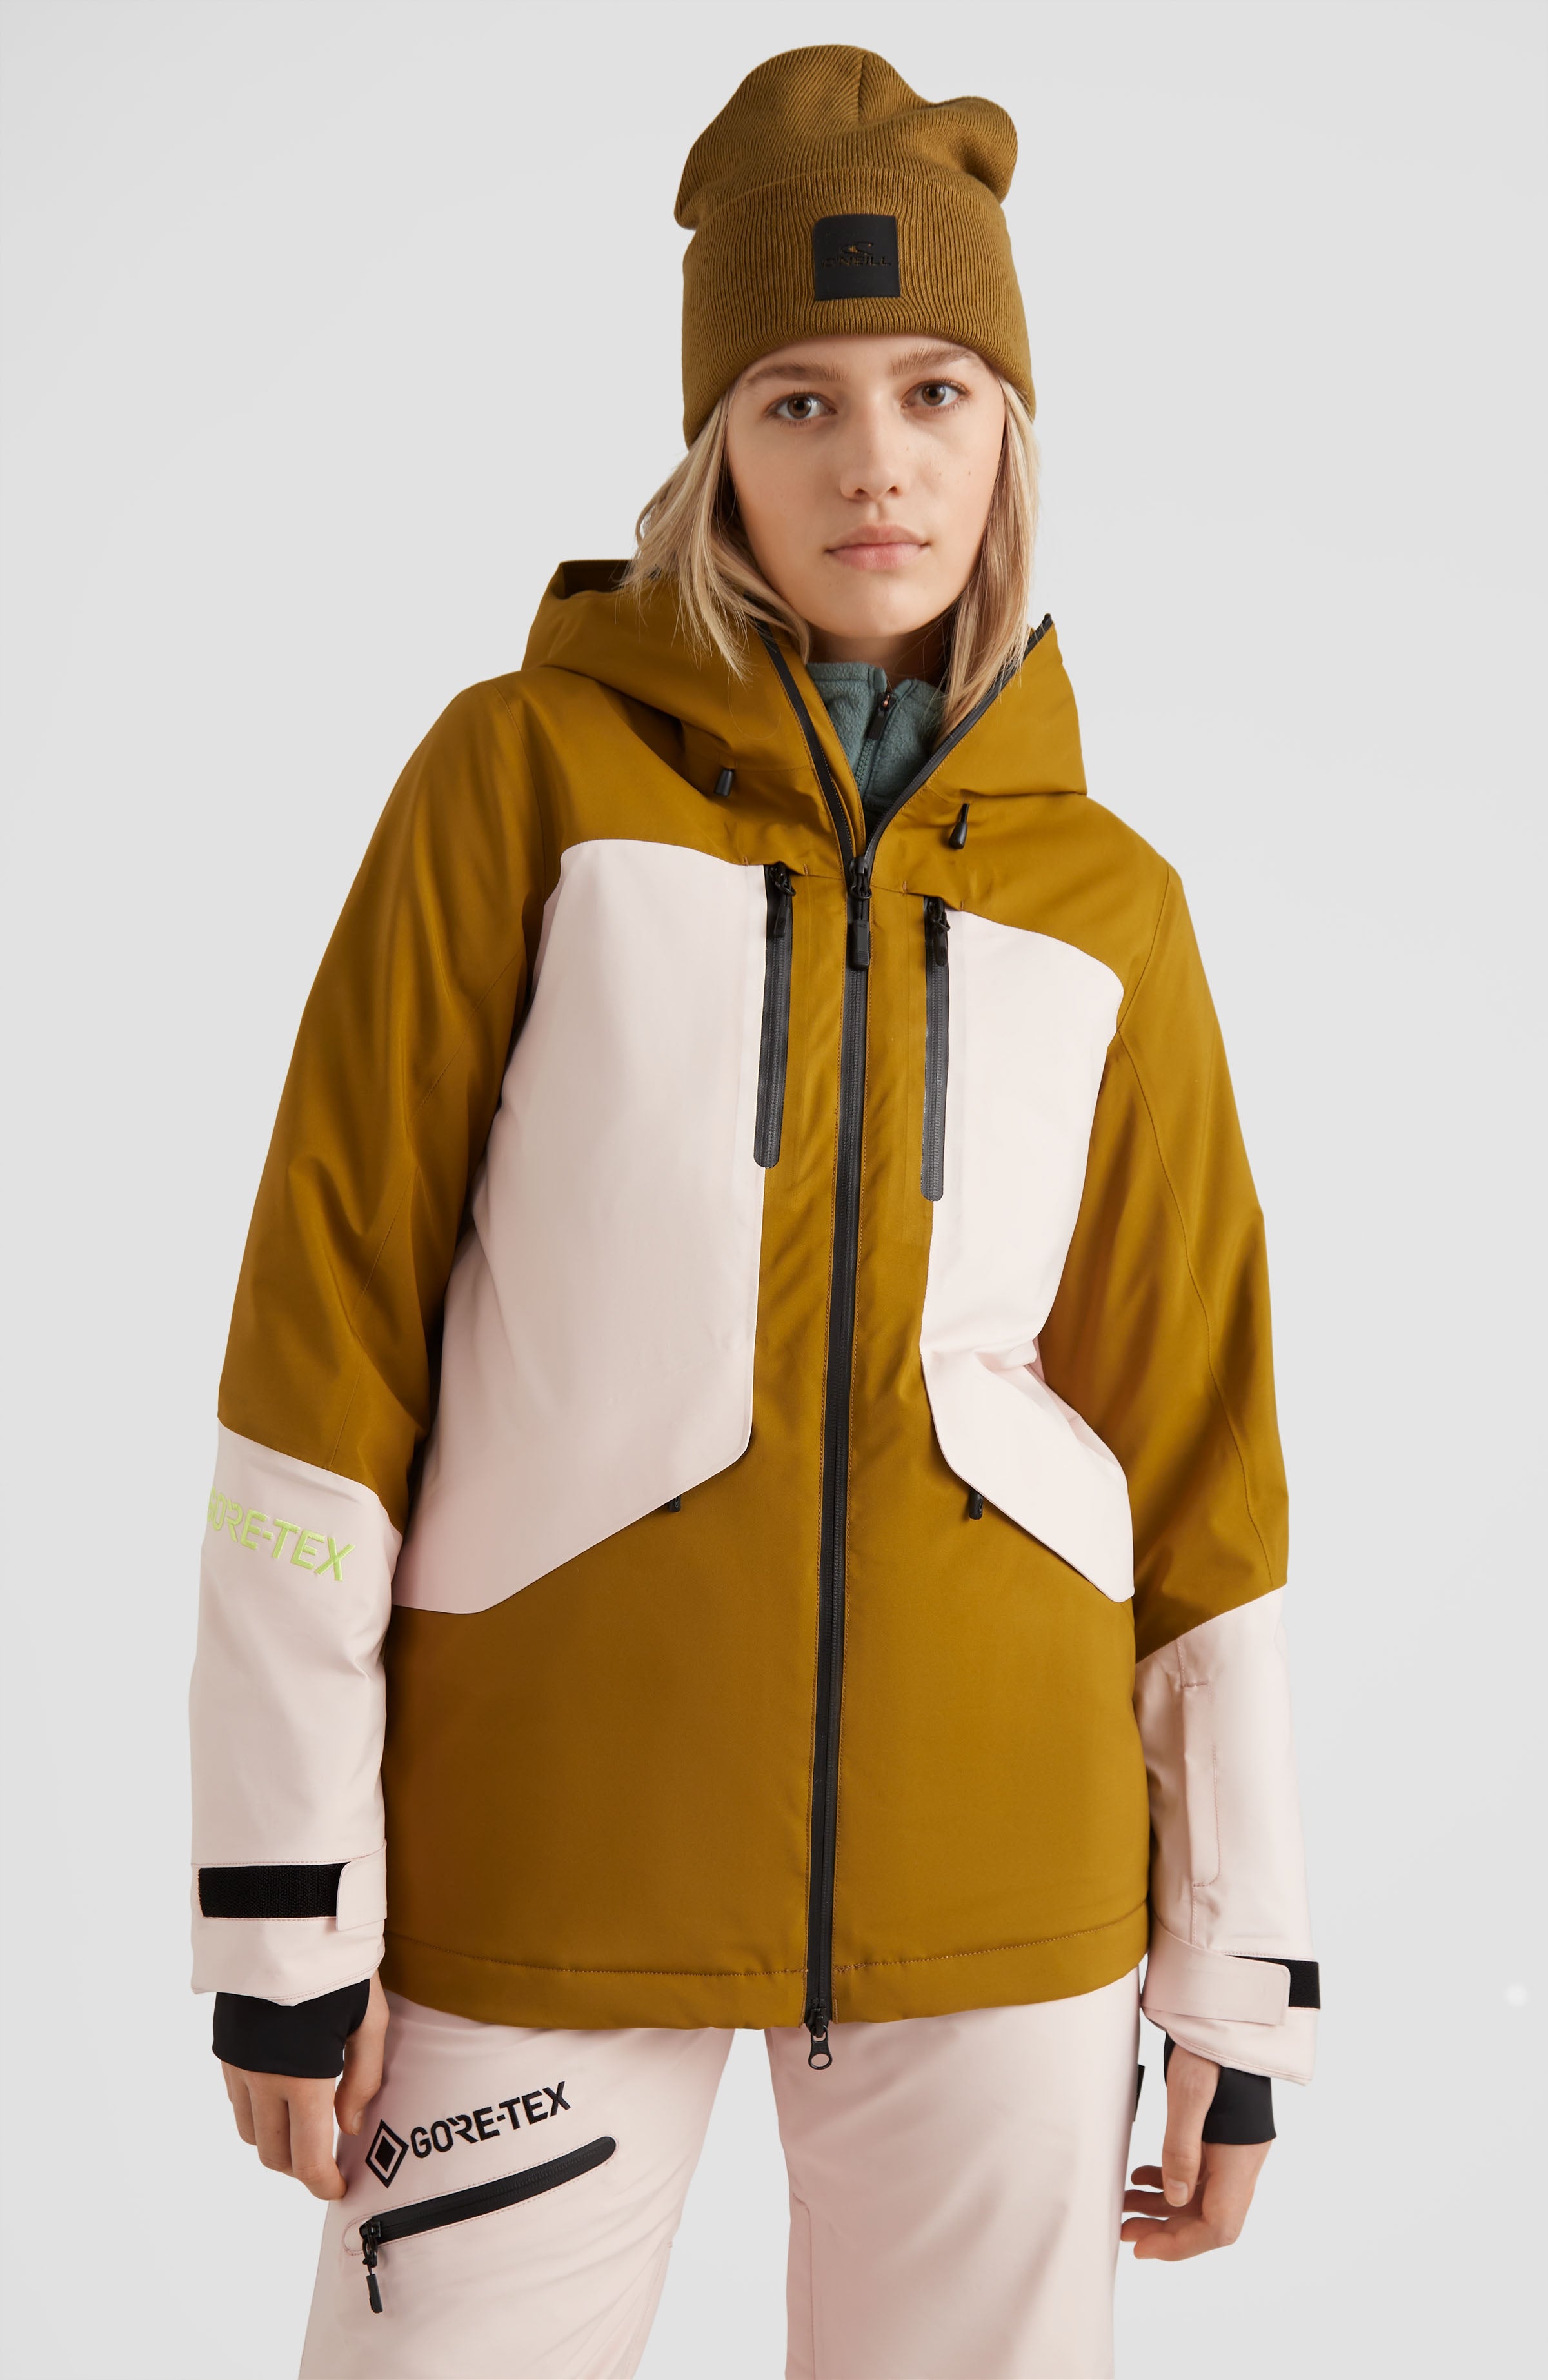 GORE-TEX Insulated Jacket | Plantation Colour Block – O'Neill